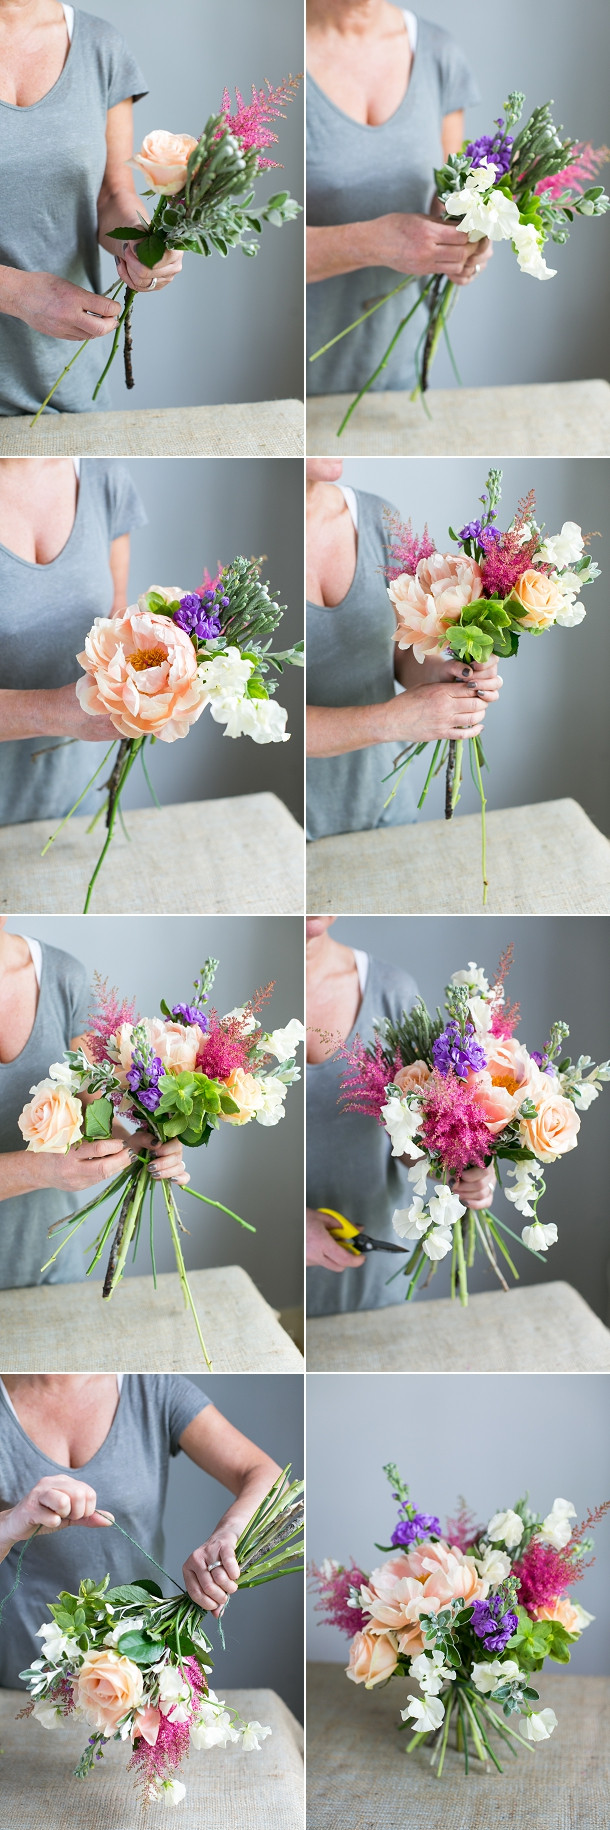 DIY Floral Arrangements Wedding
 DIY Spring bouquet tutorial with peonies